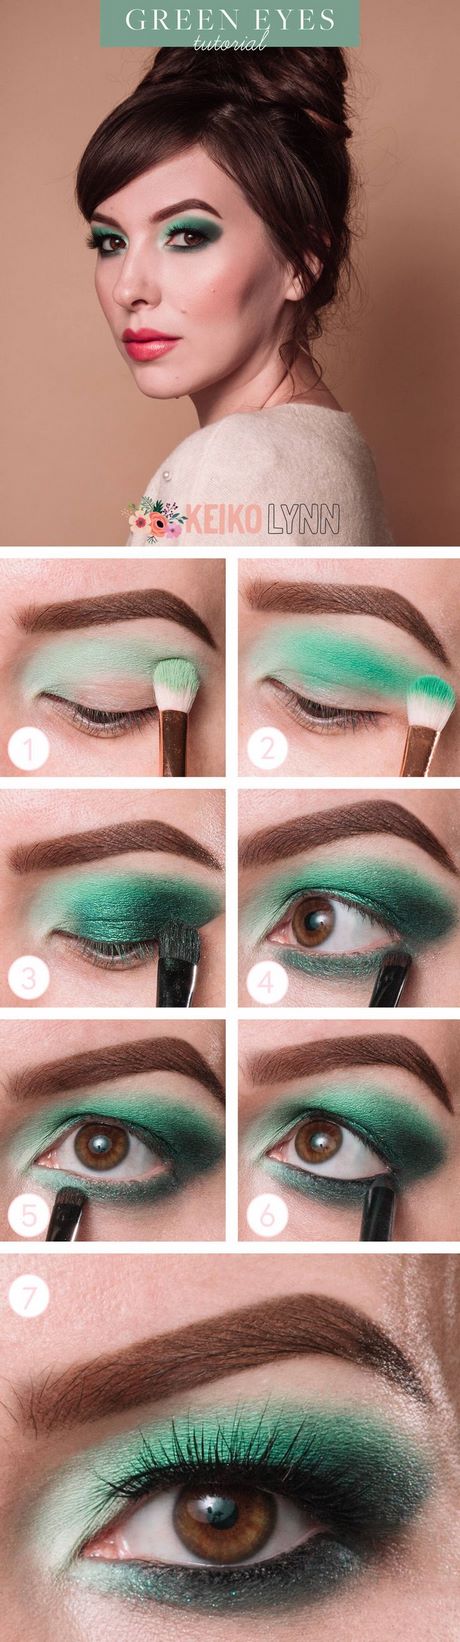 green-eye-makeup-tutorial-pinterest-11_7 Groene ogen make-up tutorial pinterest